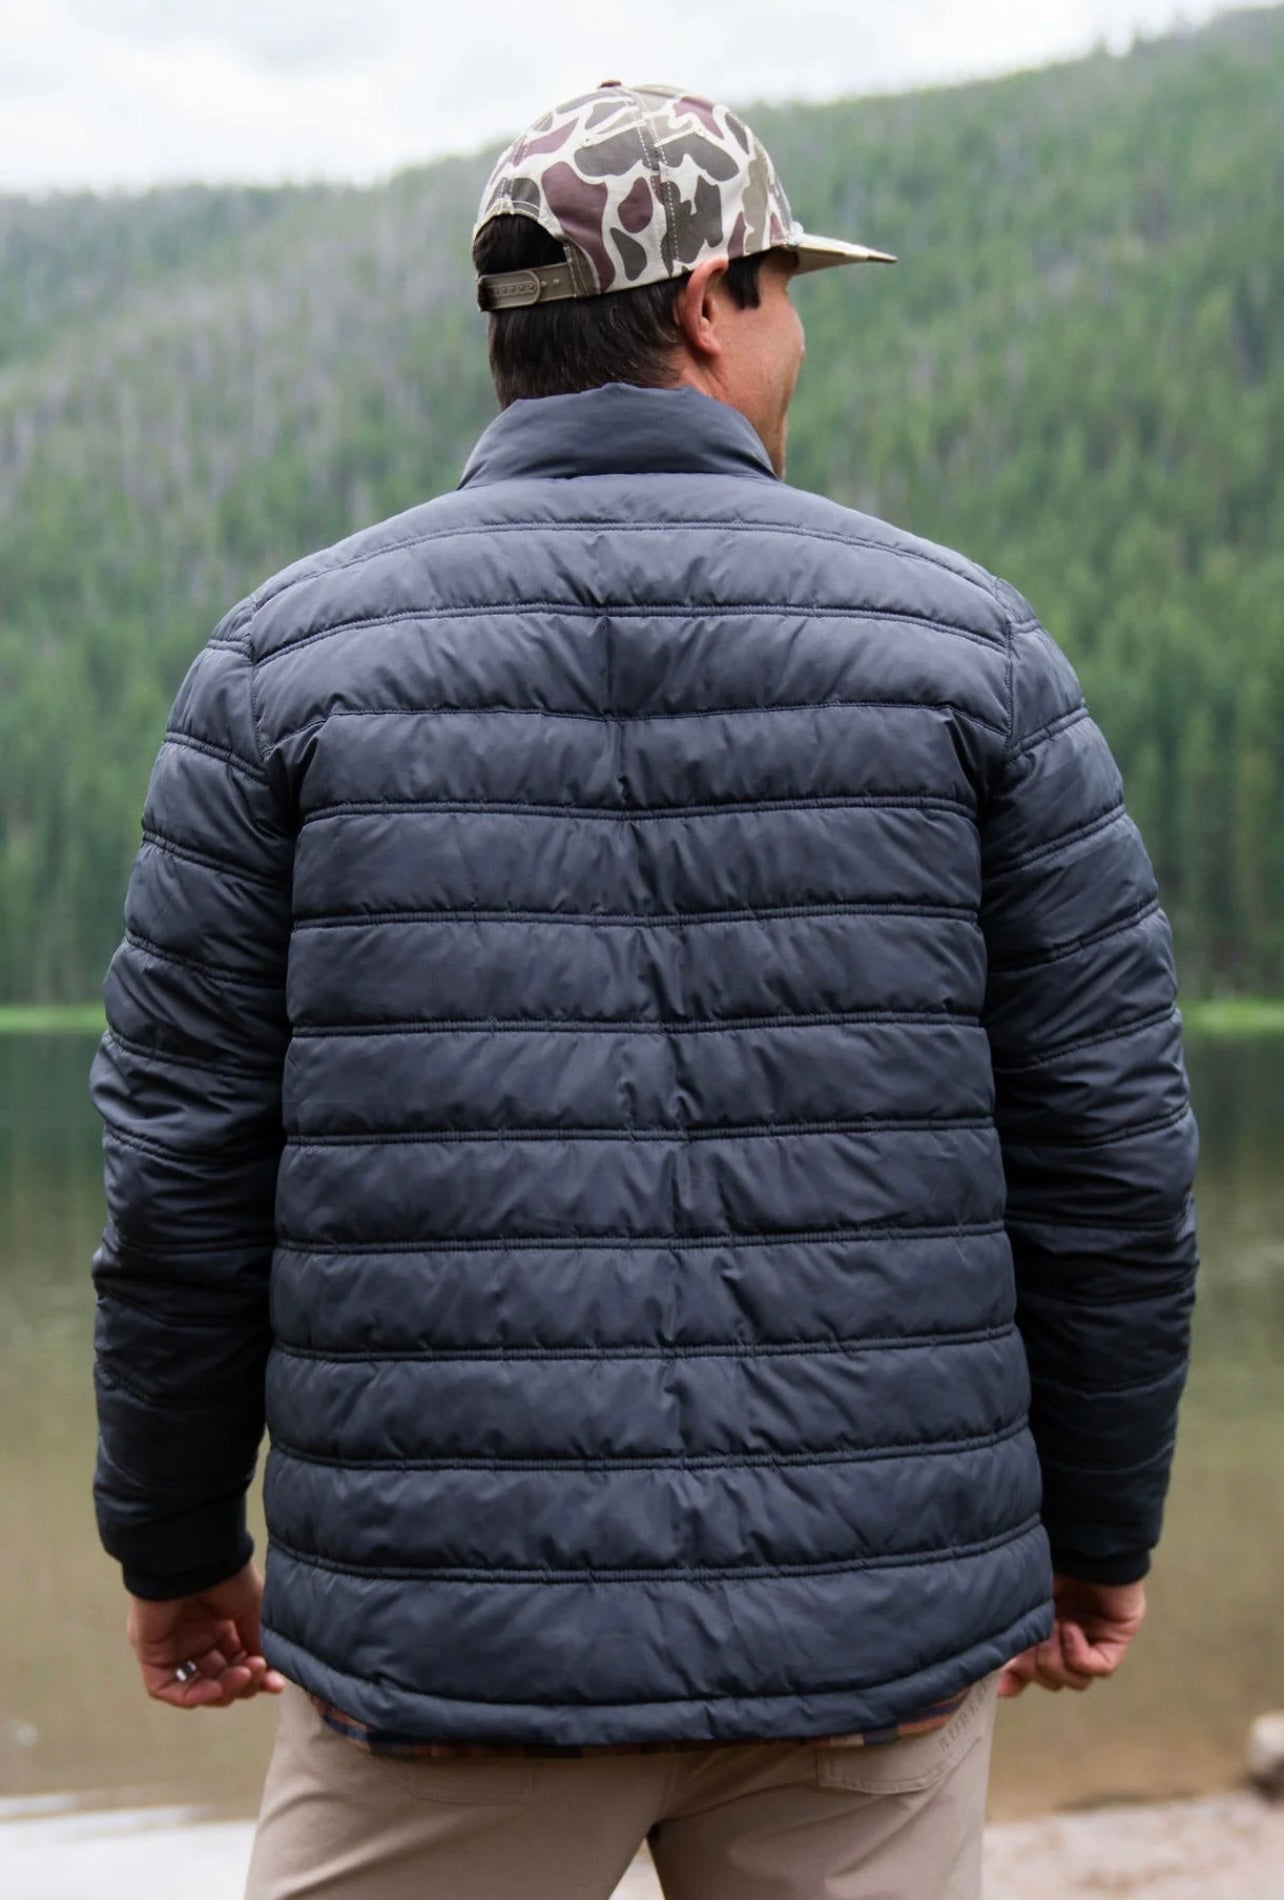 Man modeling a Men’s gun-metal gray puffer jacket in a horizontal quilting pattern